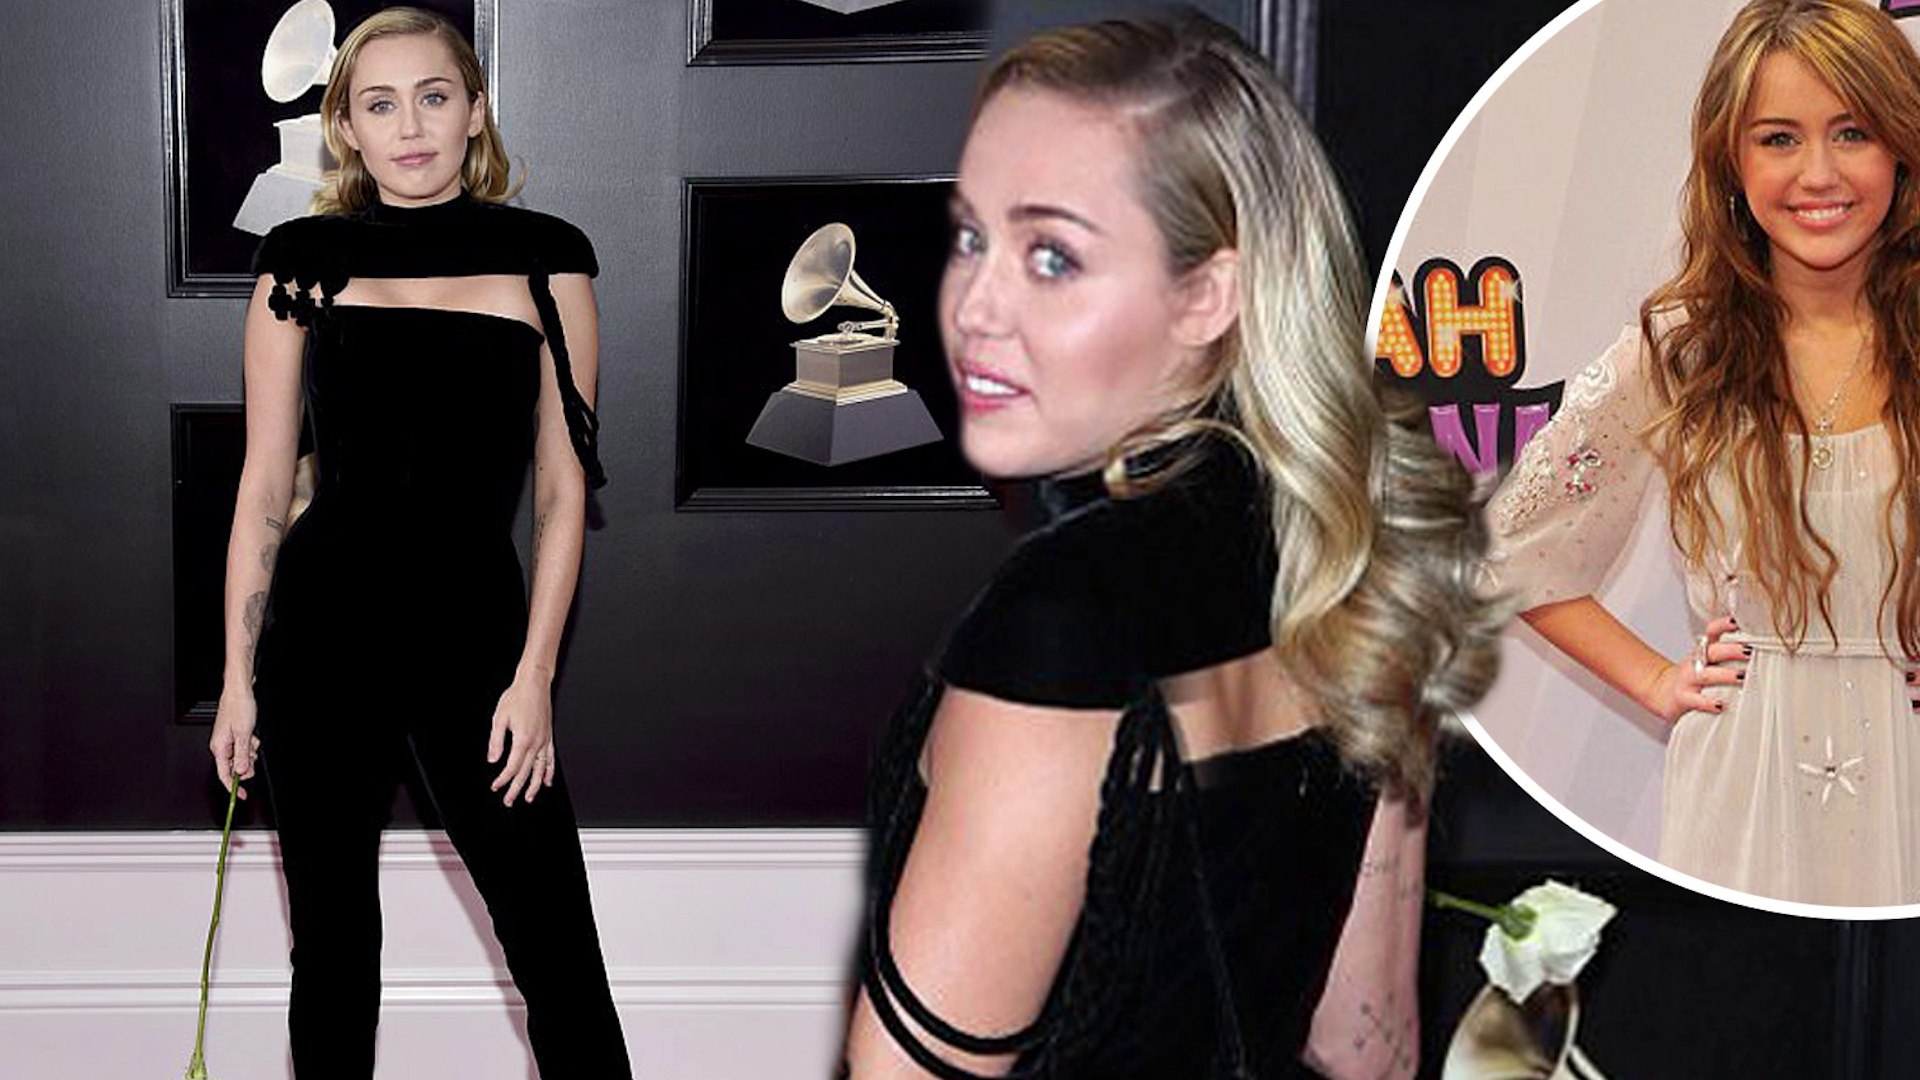 The Disney princess is back! Miley Cyrus flaunts long Hannah Montana-like locks while wearing slinky